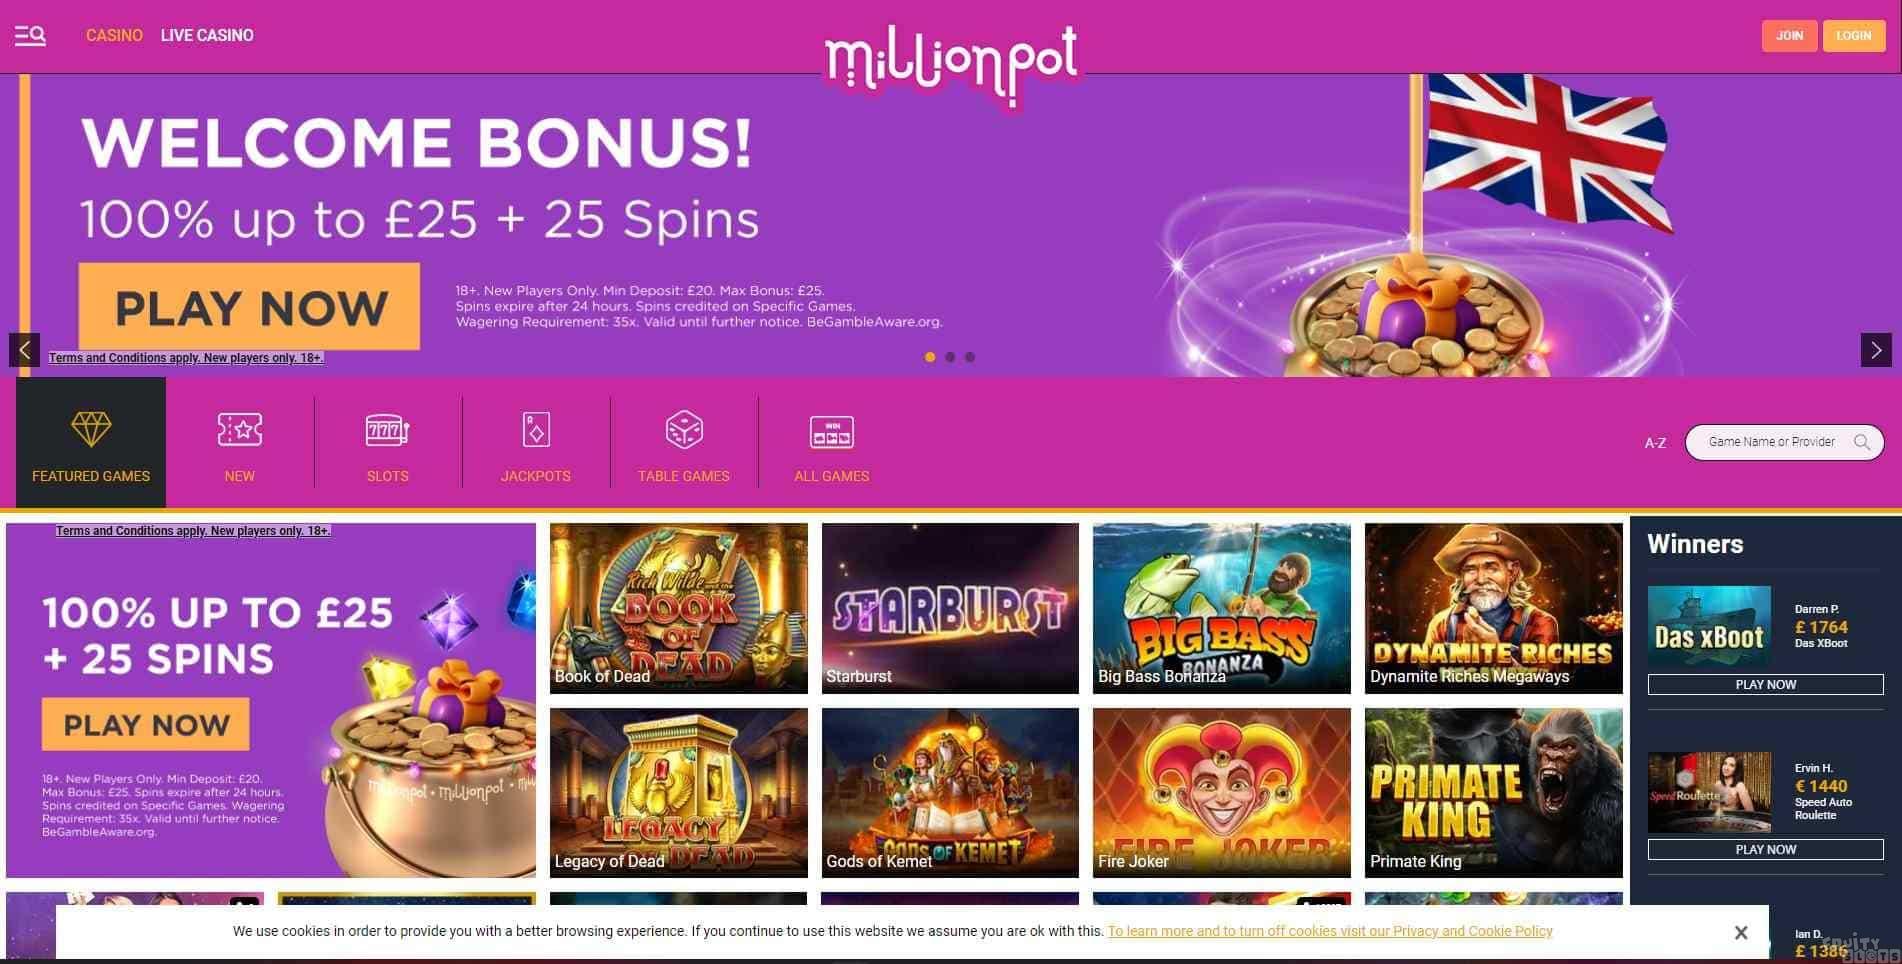 millionpot casino no deposit bonus